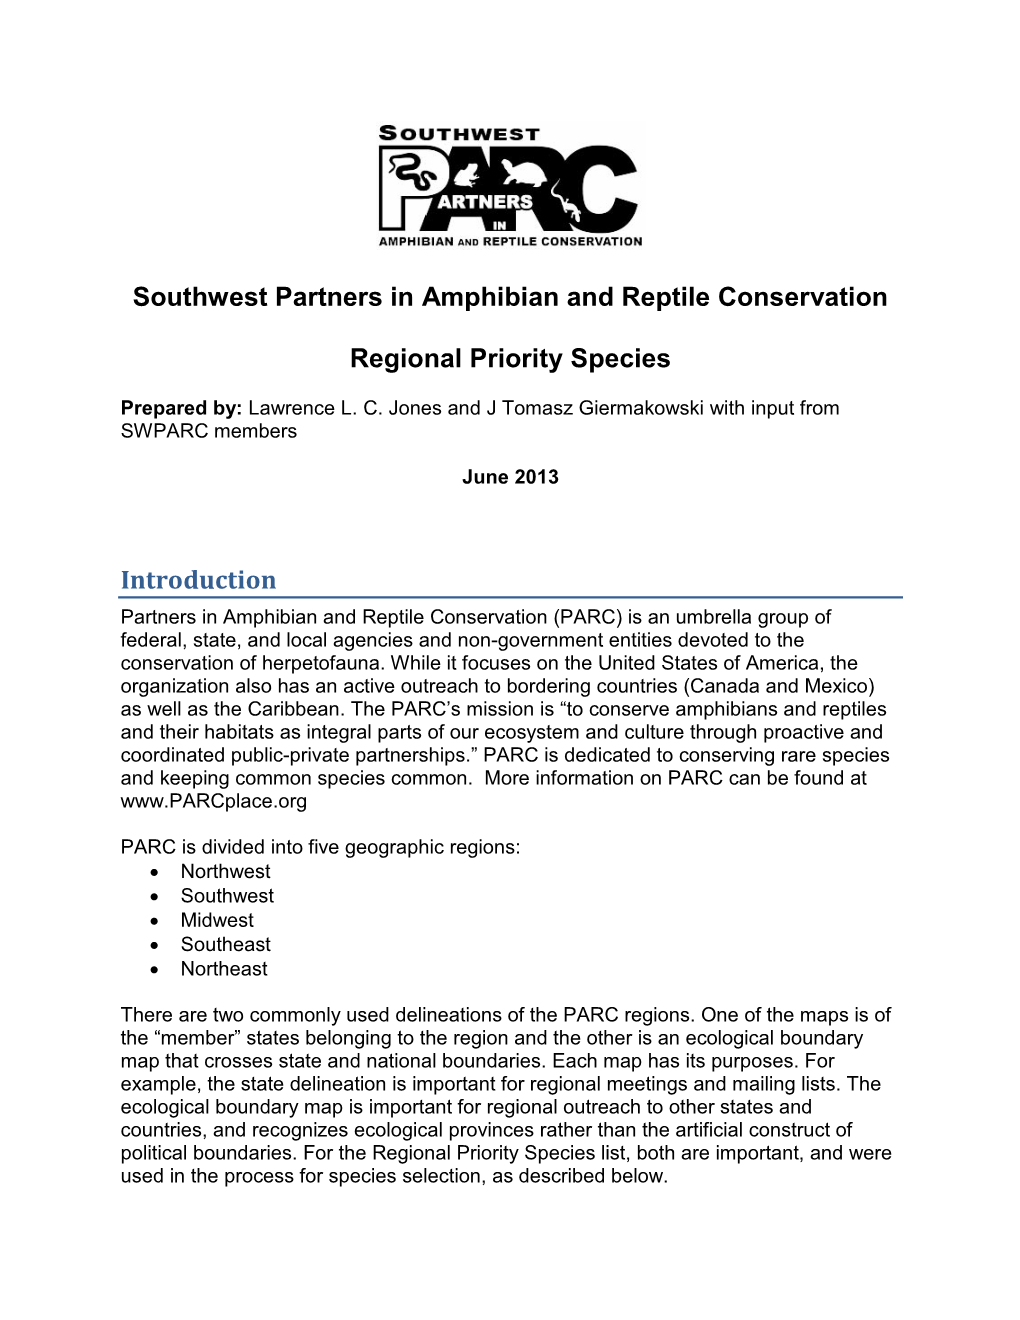 SWPARC Regional Priority Species List – June 2013